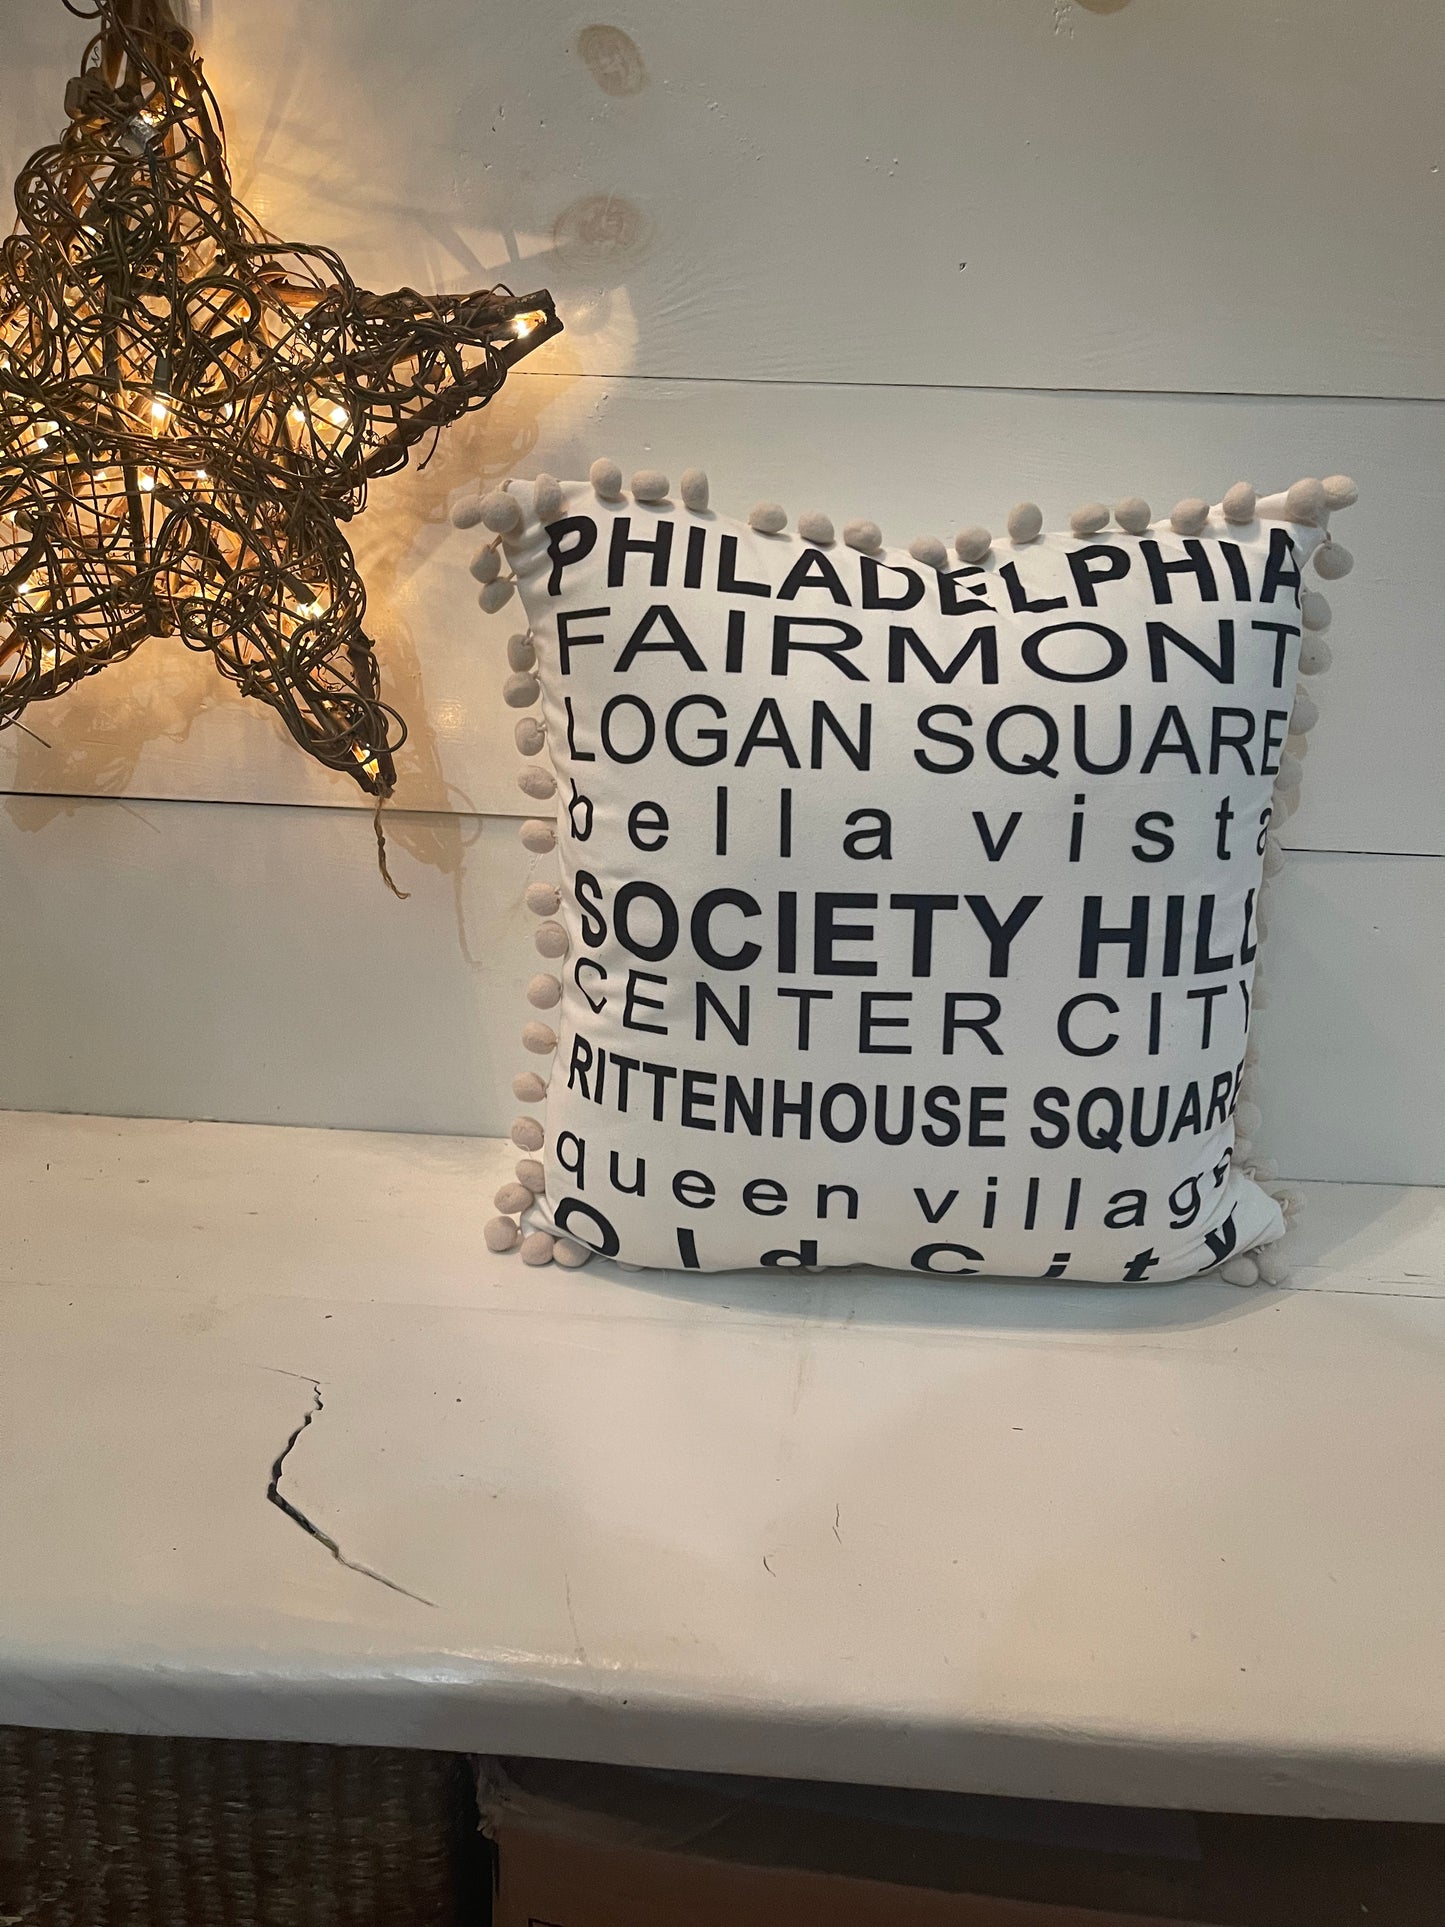 Home location pillow, Philadelphia pillow, hometown pillow, custom print pillow